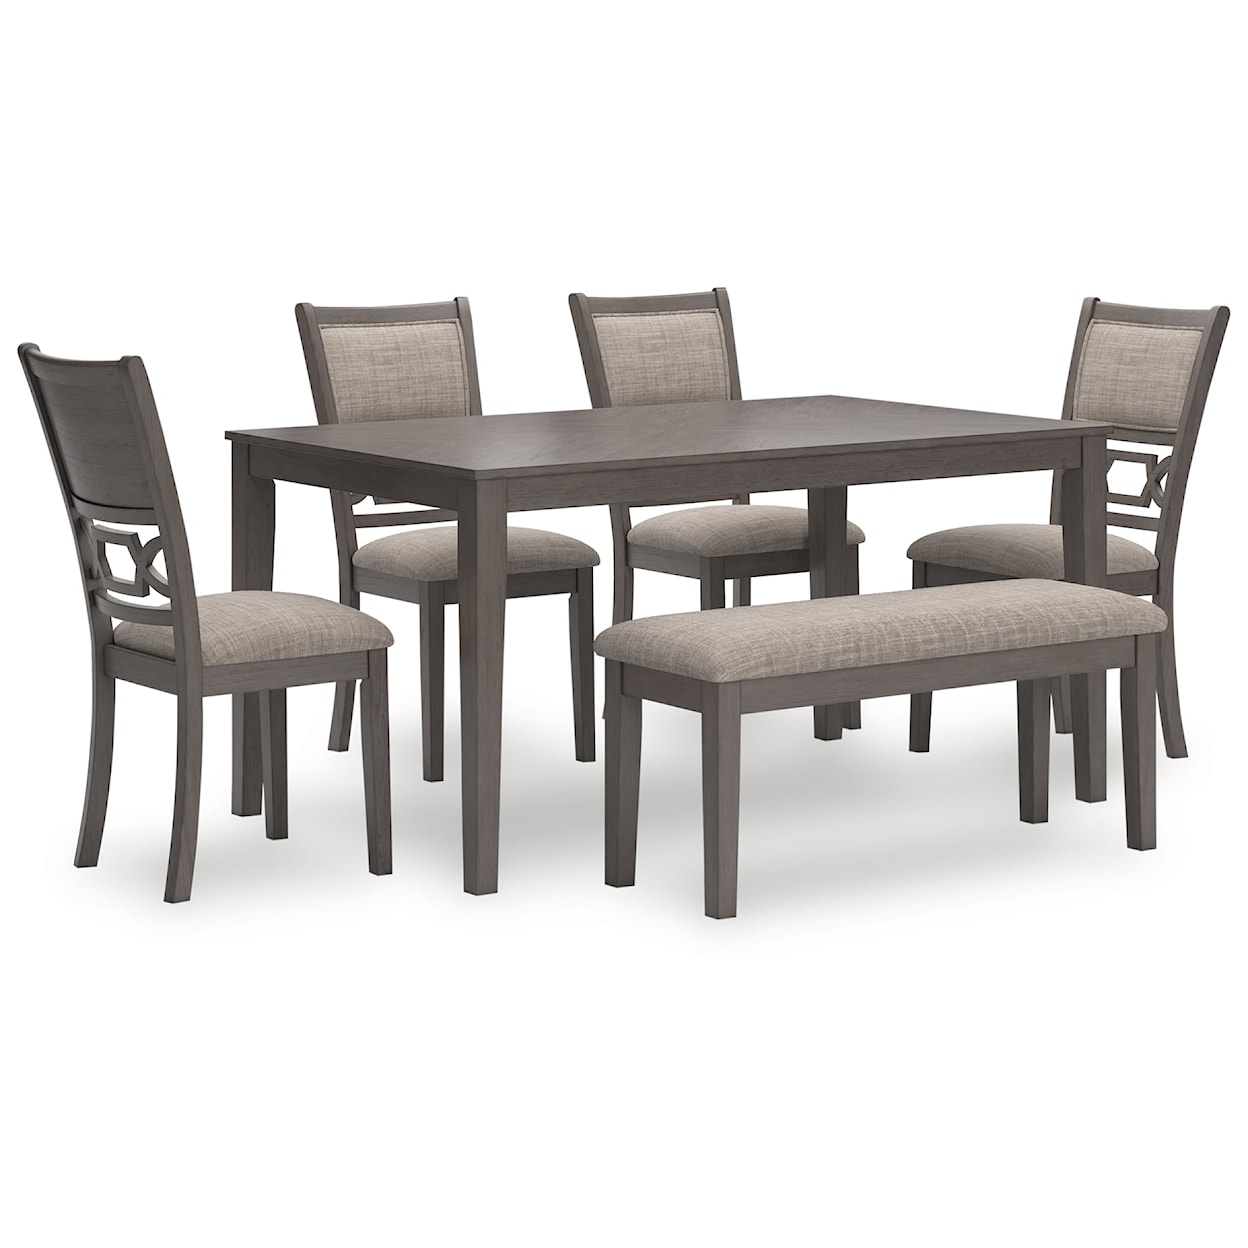 Ashley Furniture Signature Design Wrenning Dining Room Table Set (Set of 6)